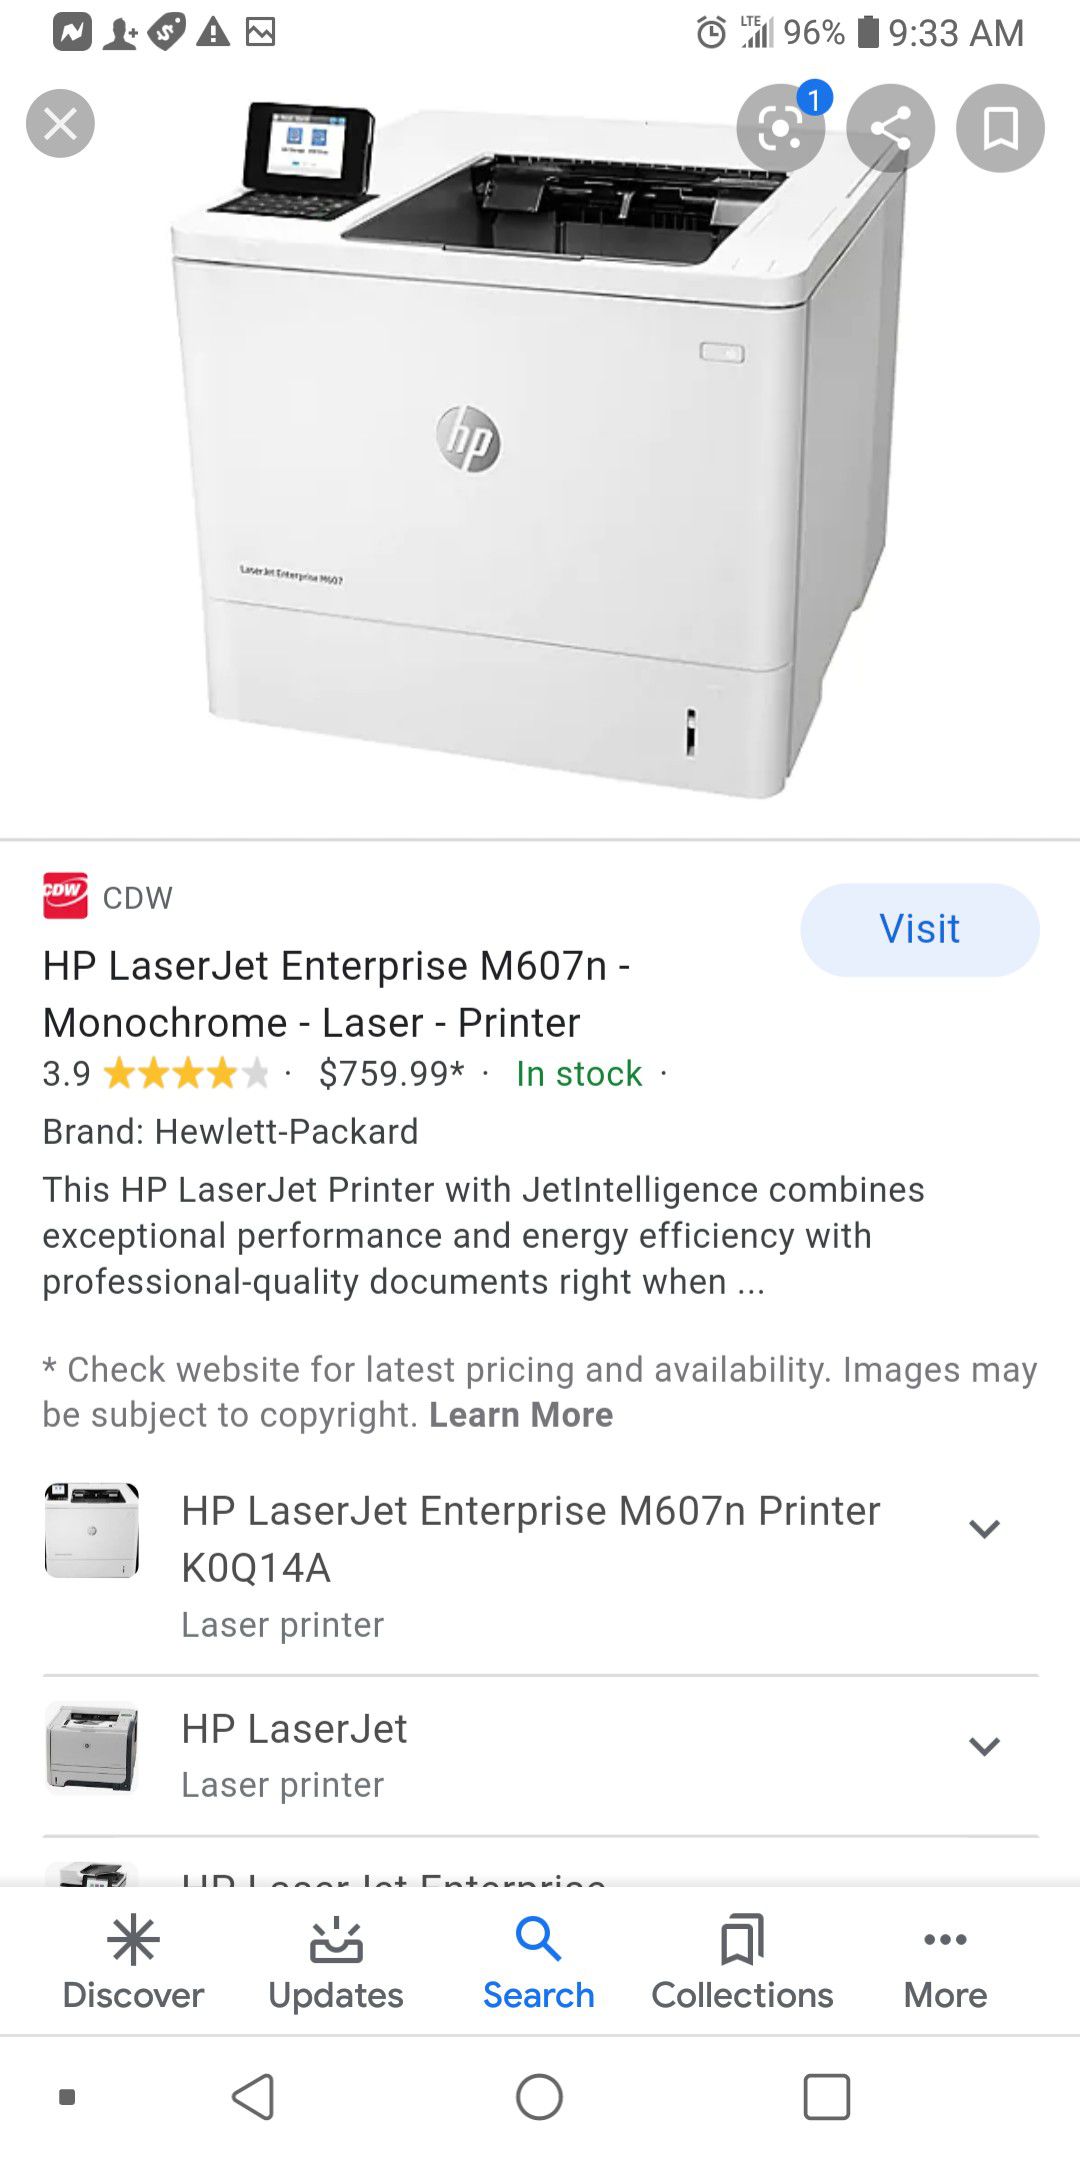 I have a new LaserJet Enterprise HP printer m607